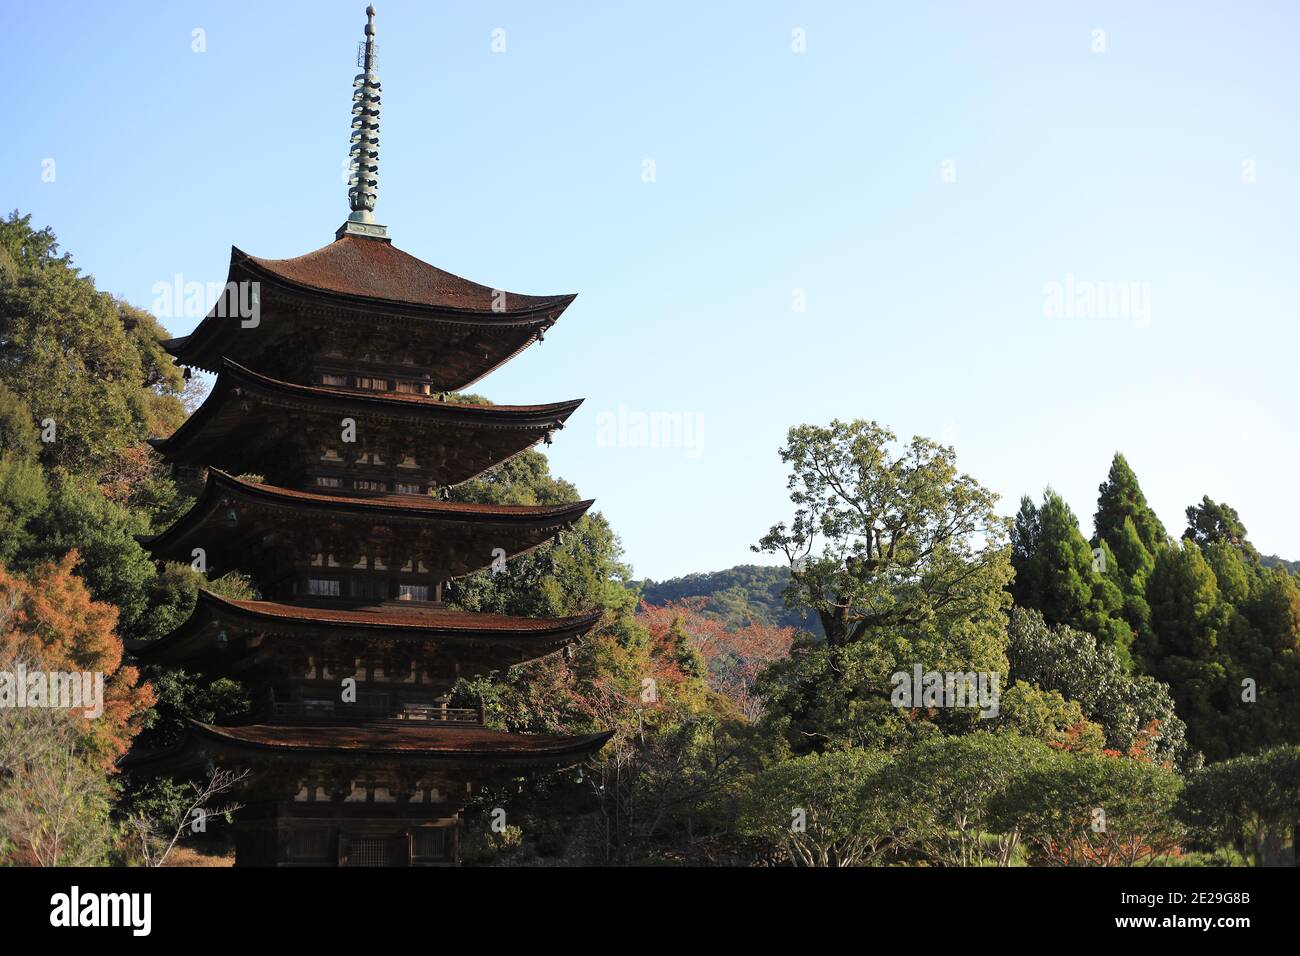 Ruri koji temple five-storied pagoda in Yamaguchi pref, Japan Stock Photo